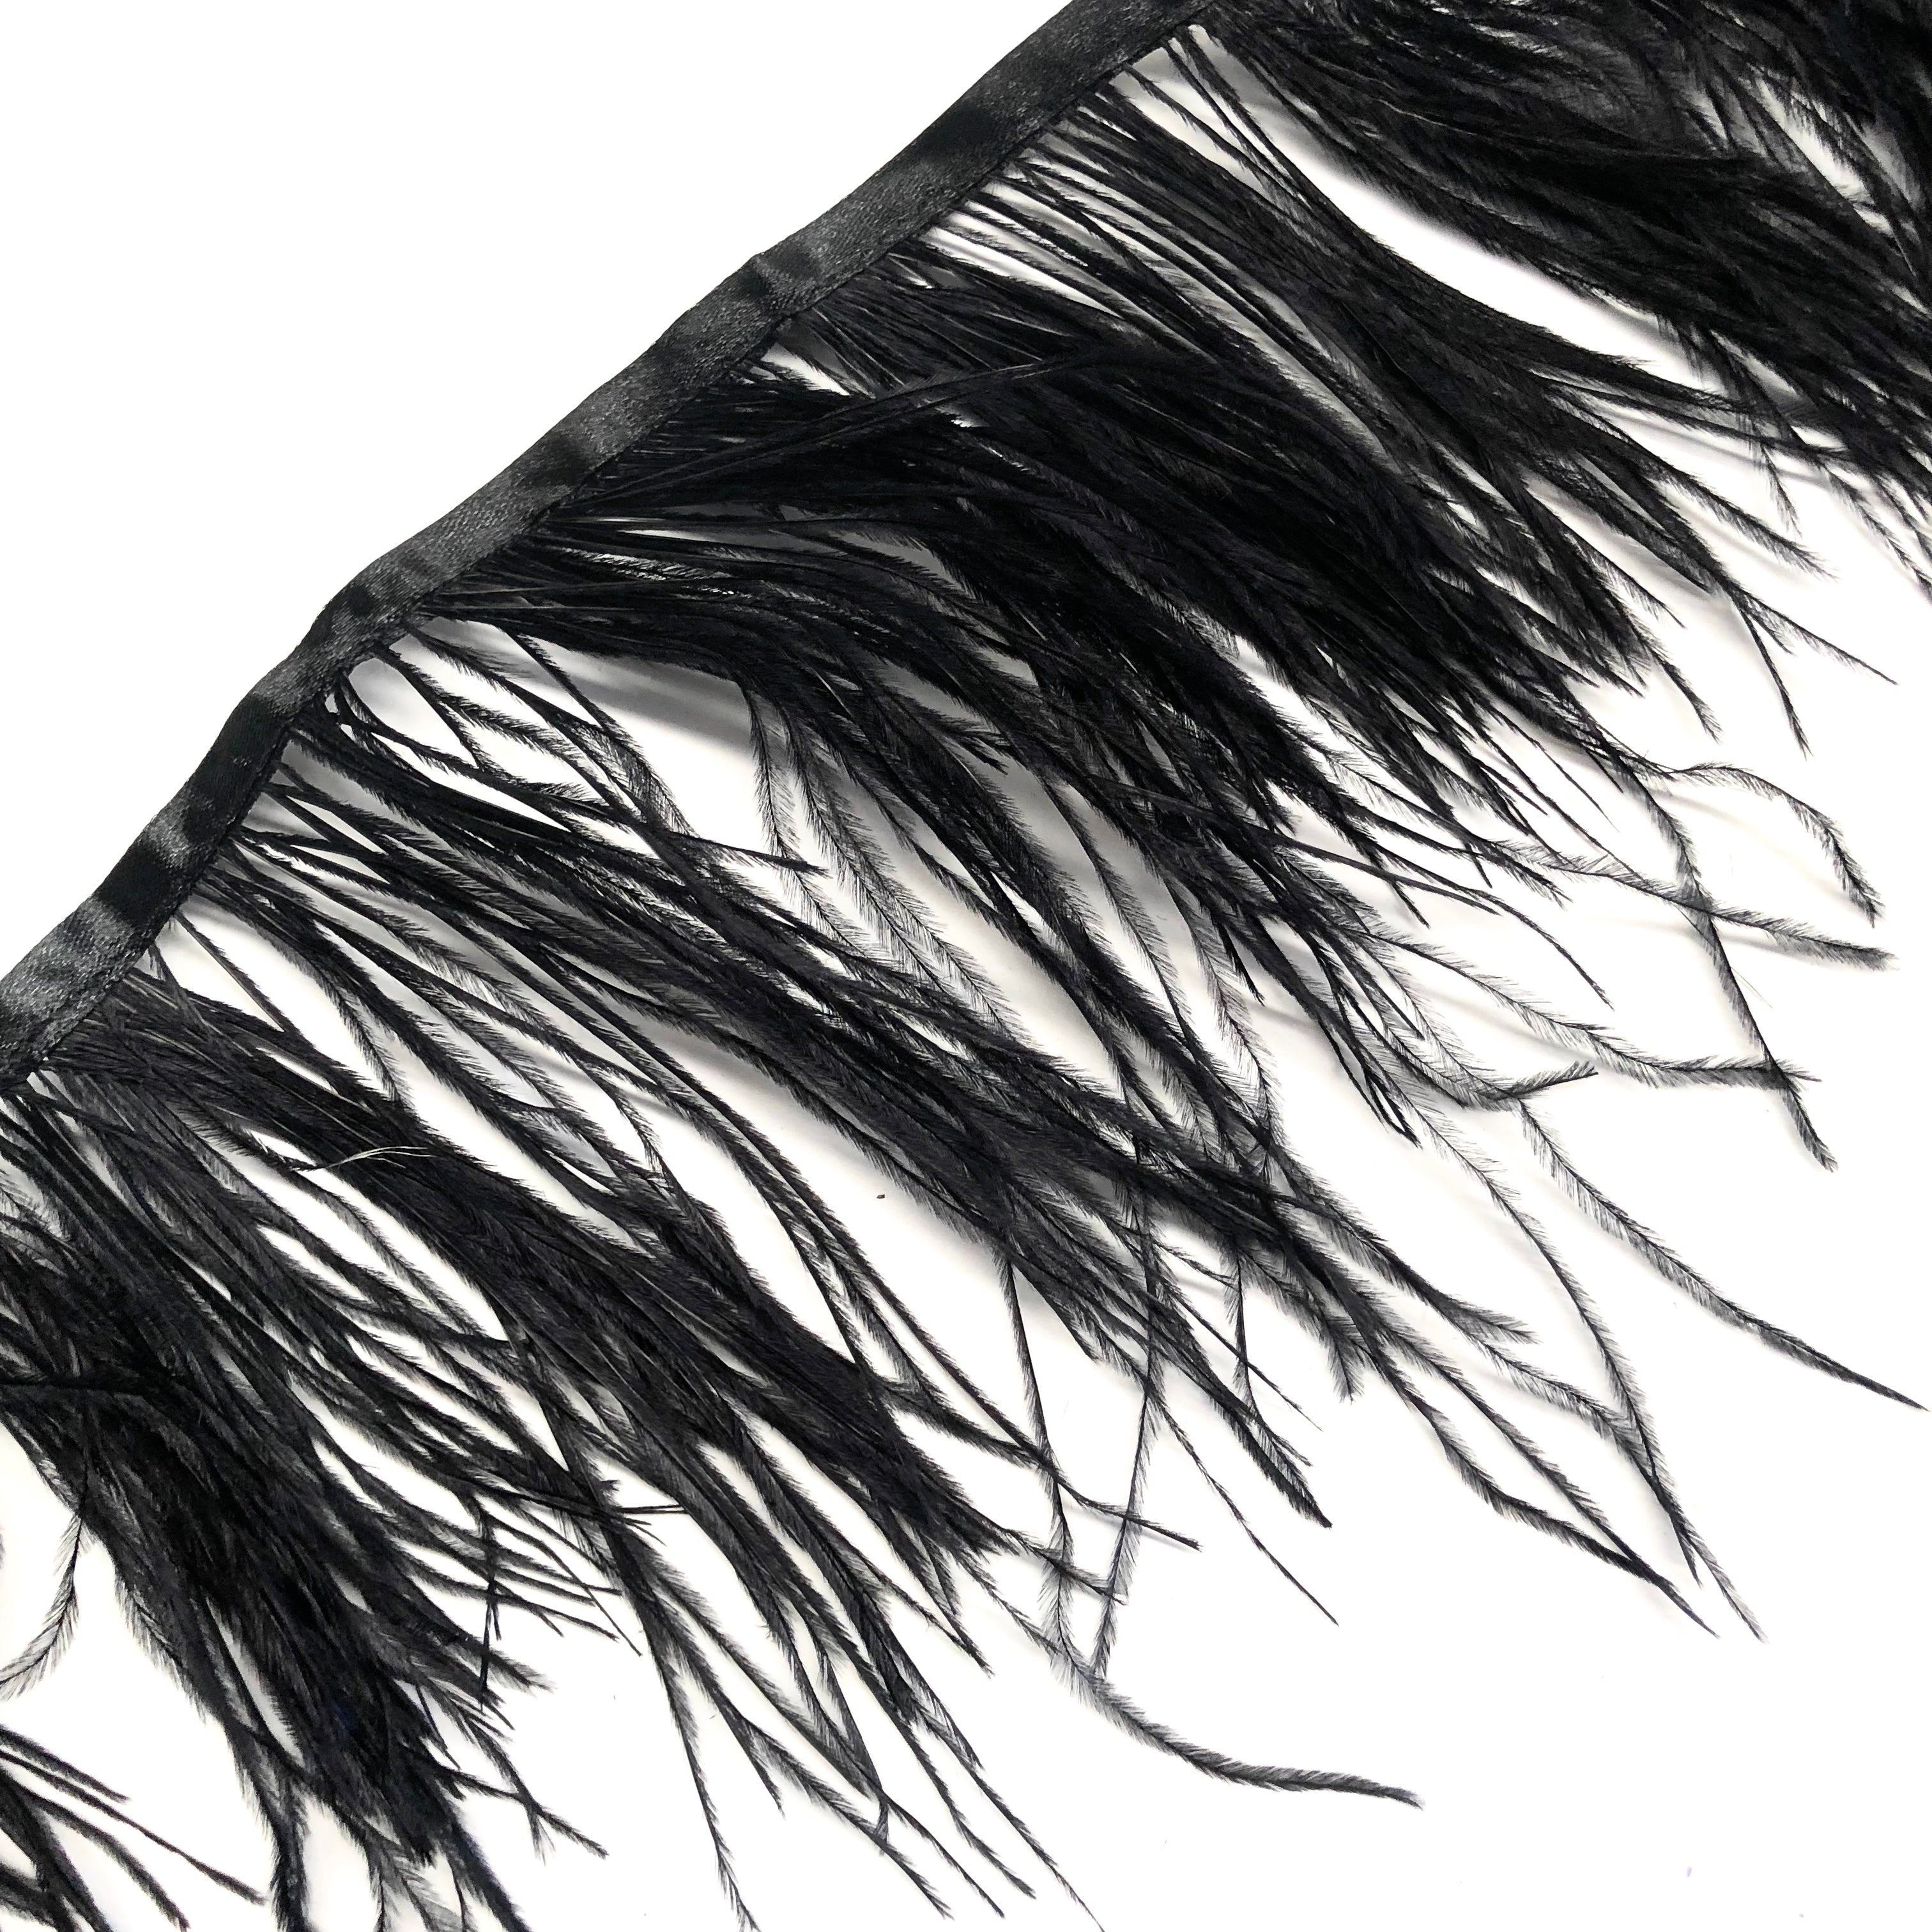 Ostrich Feathers Strung per metre - Black